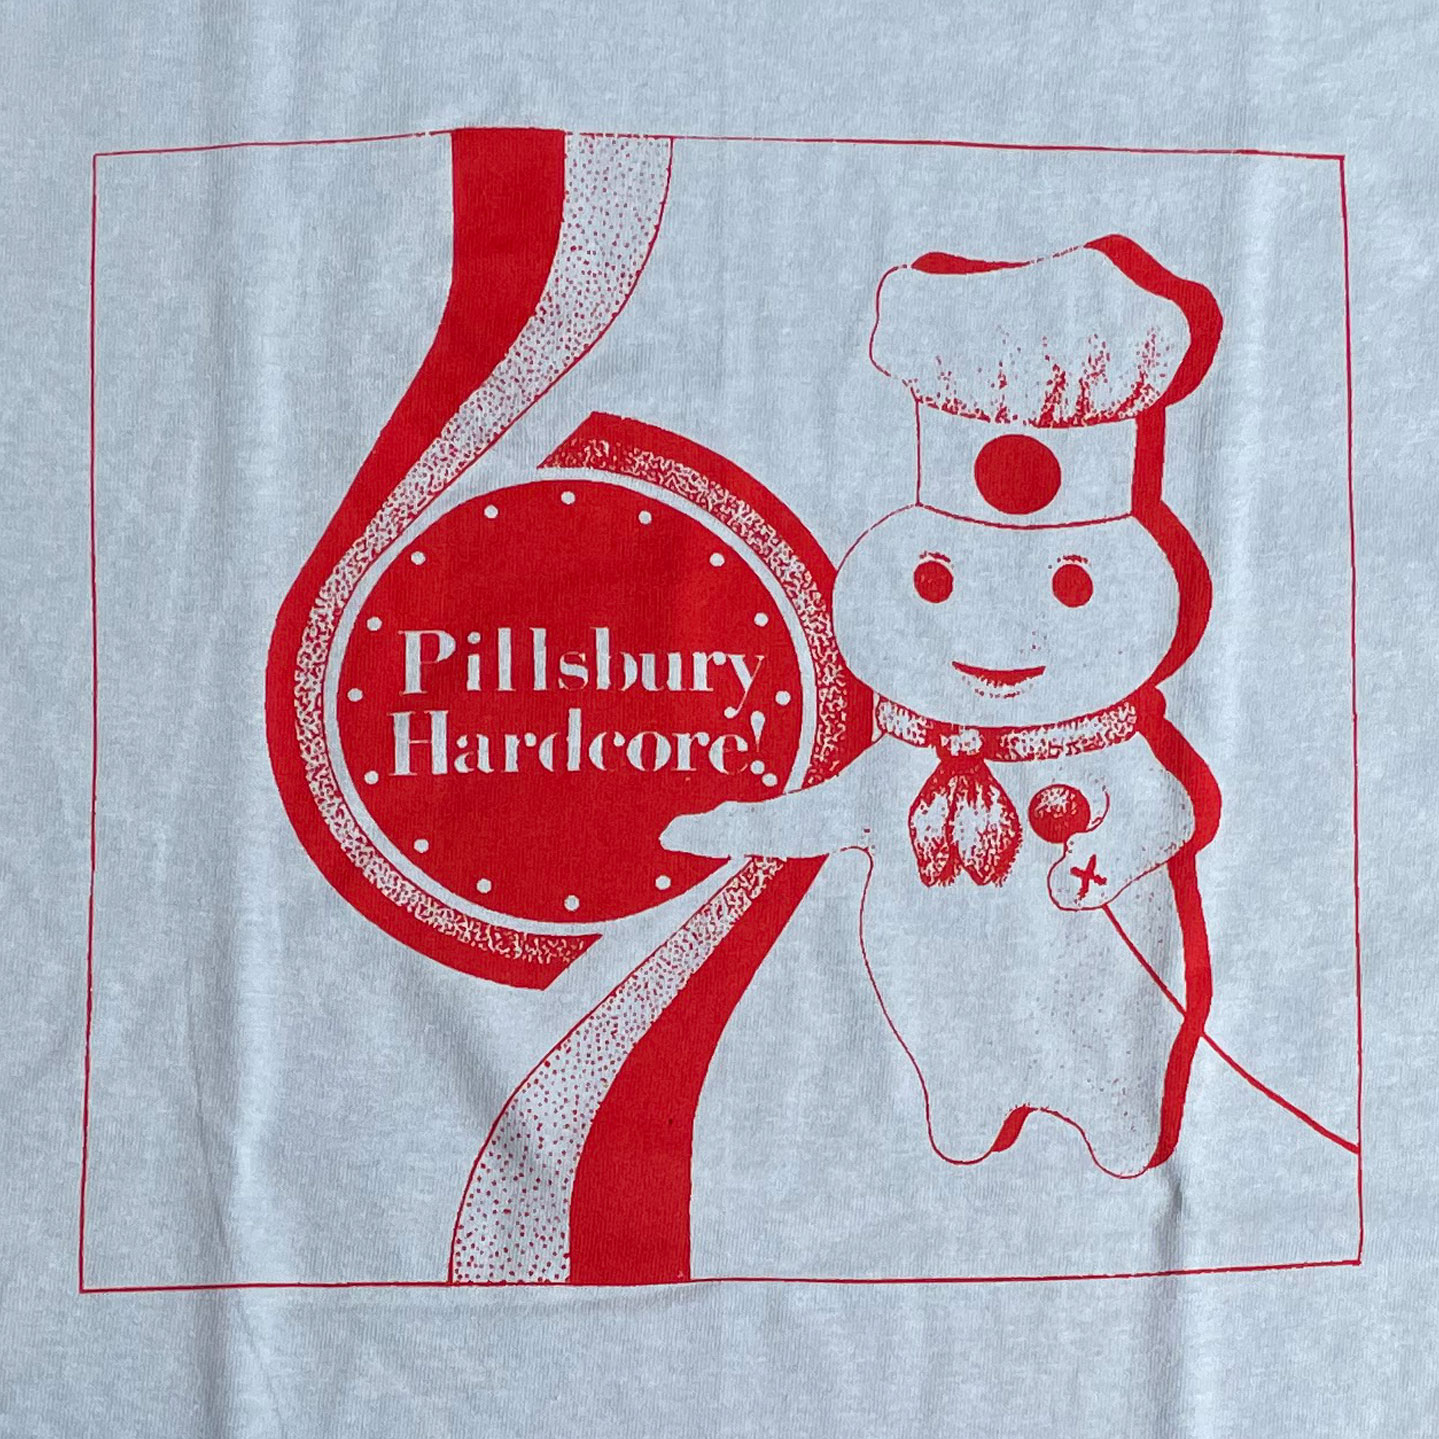 Pillsbury Hardcore Tシャツ In A Straight Edge Limbo